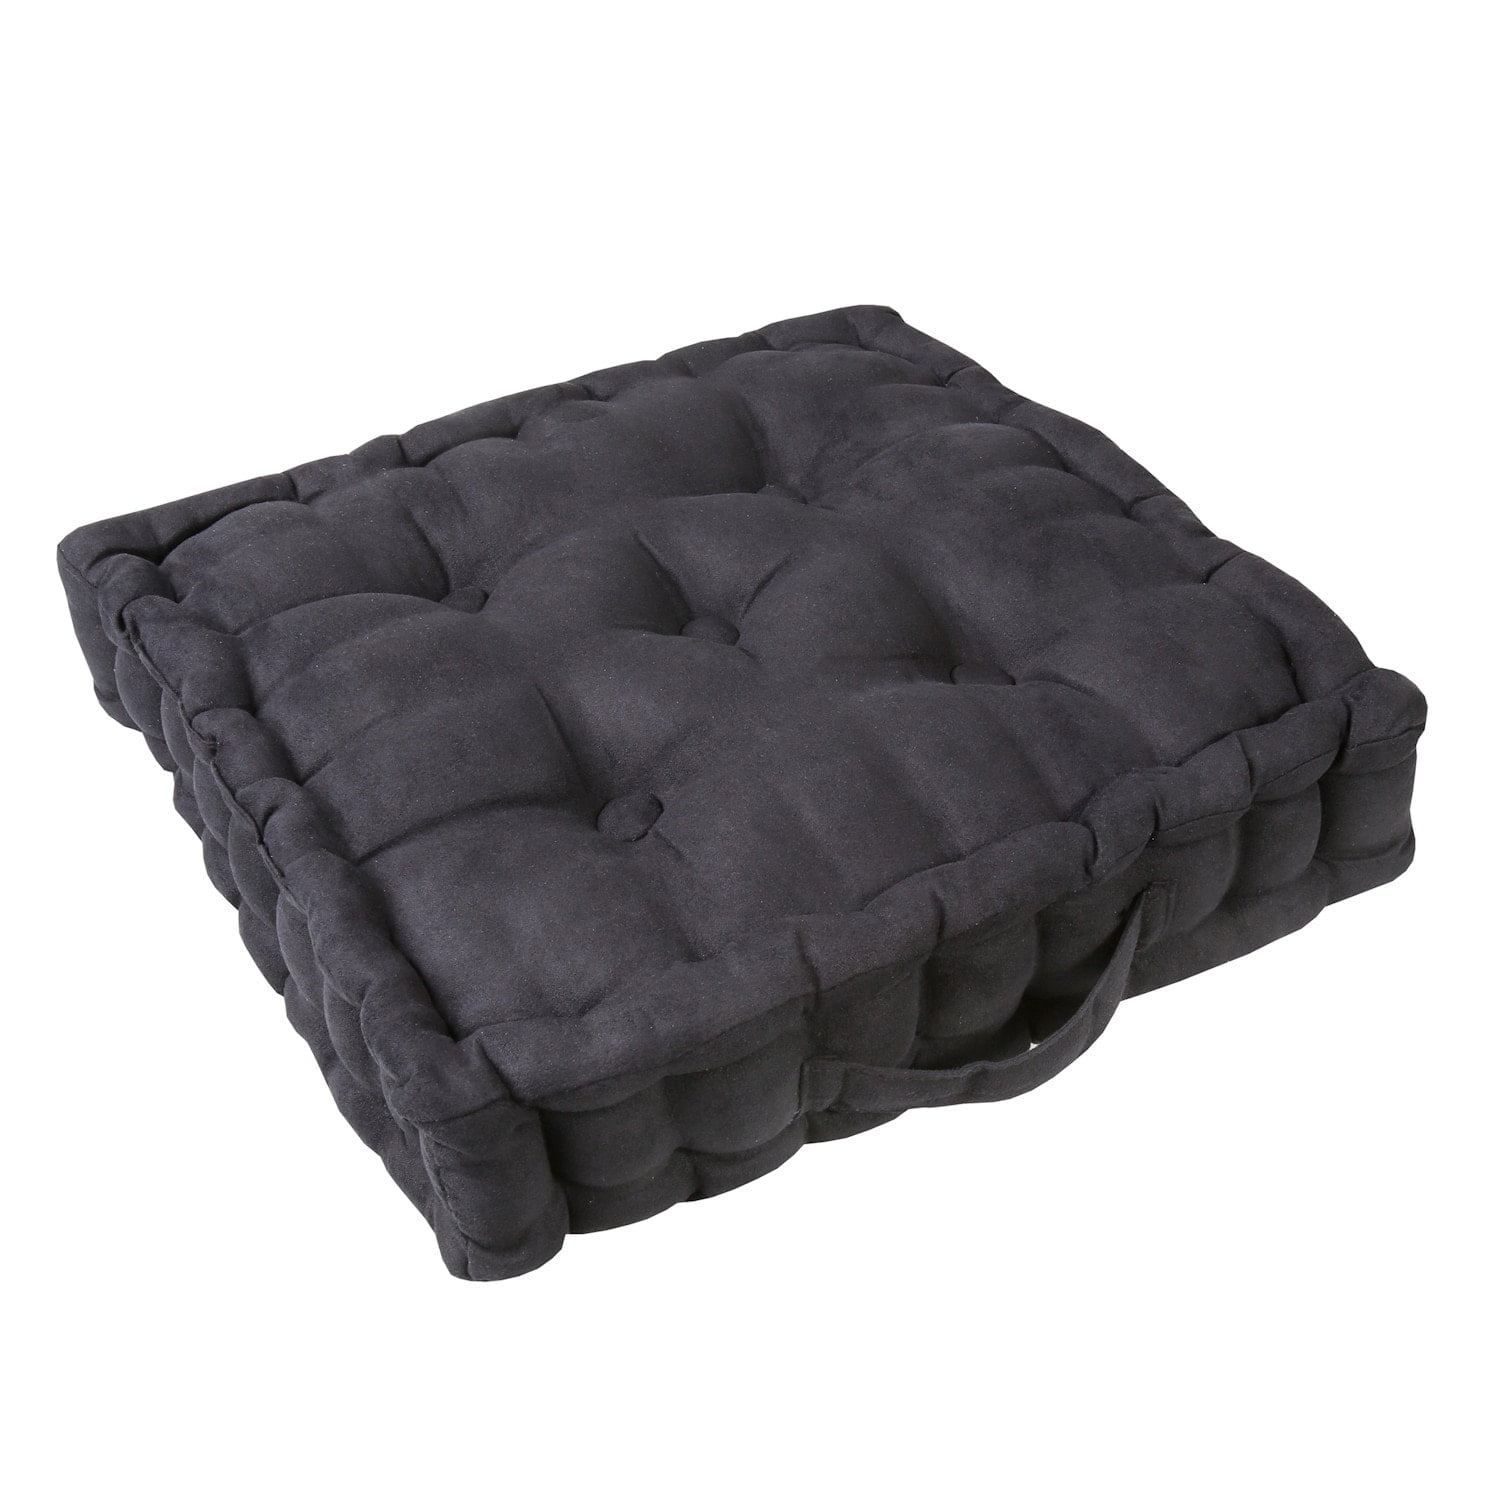 Black Suede Orthopaedic Foam Armchair Booster Cushion